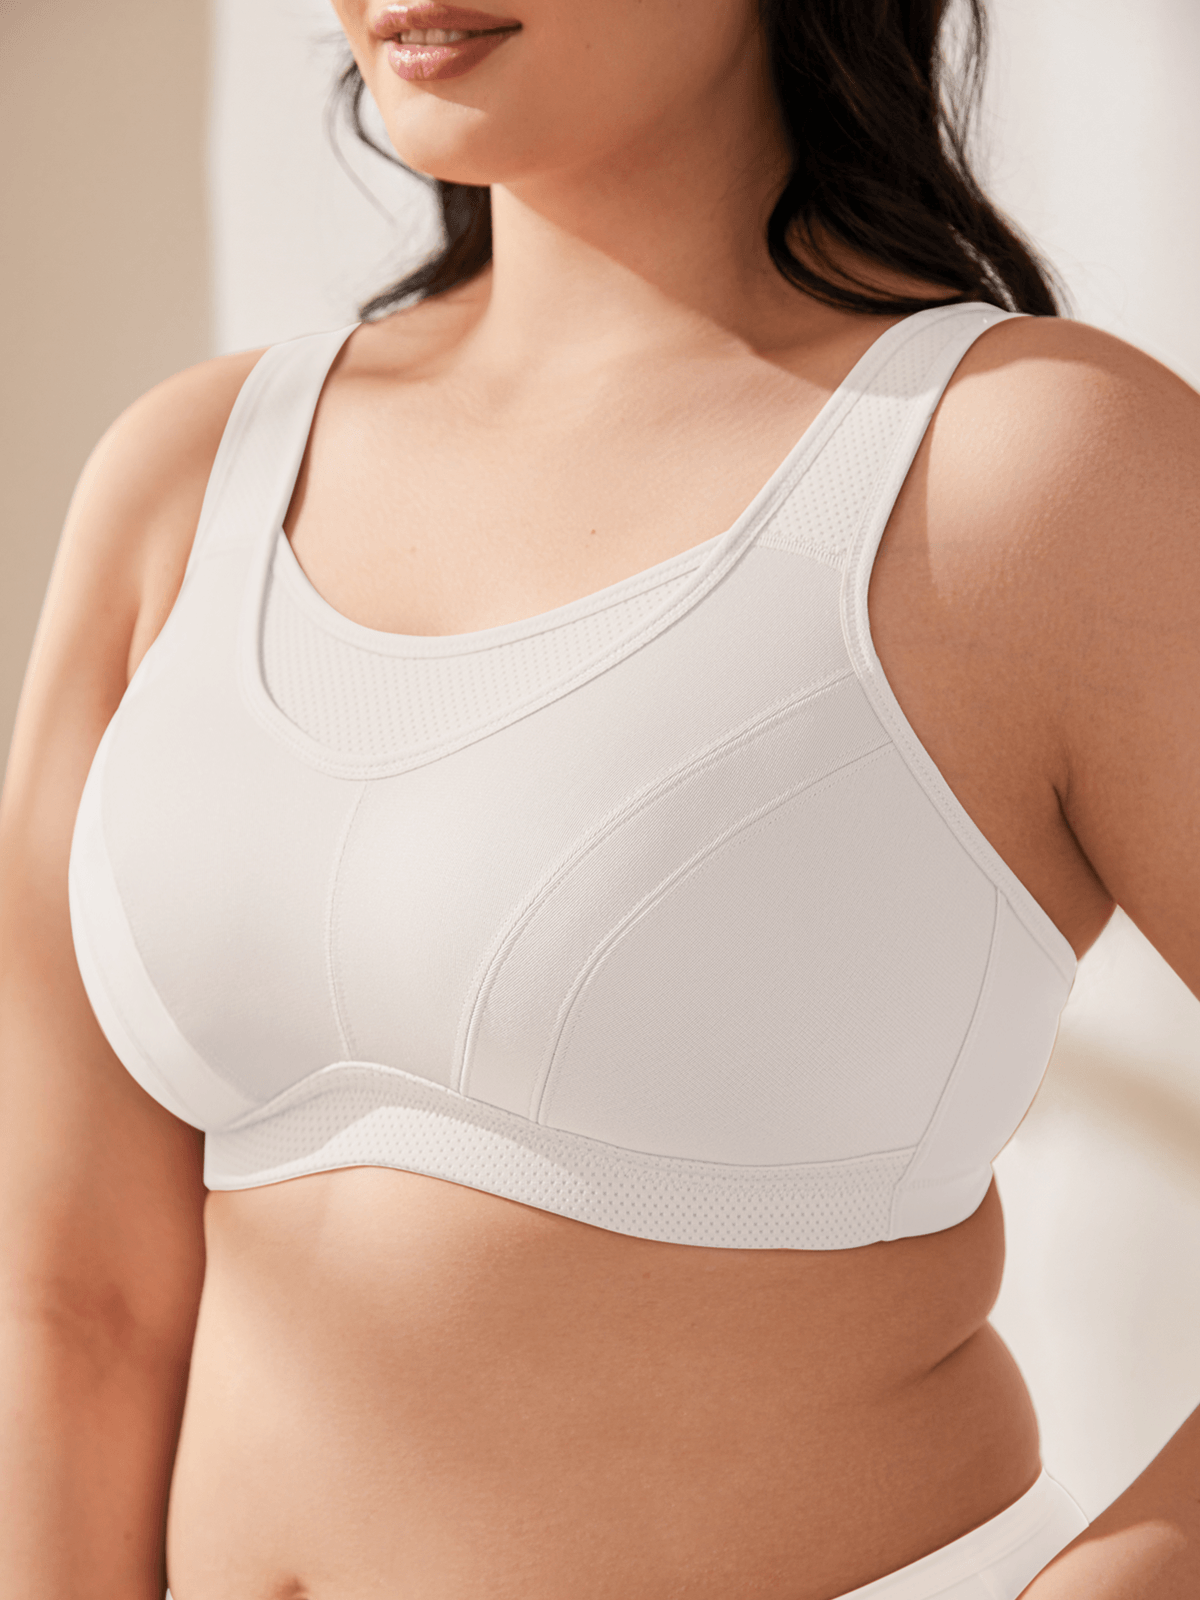 Buy VESY Women's Cotton Non Padded Wire Free Plus Size Sports Bra